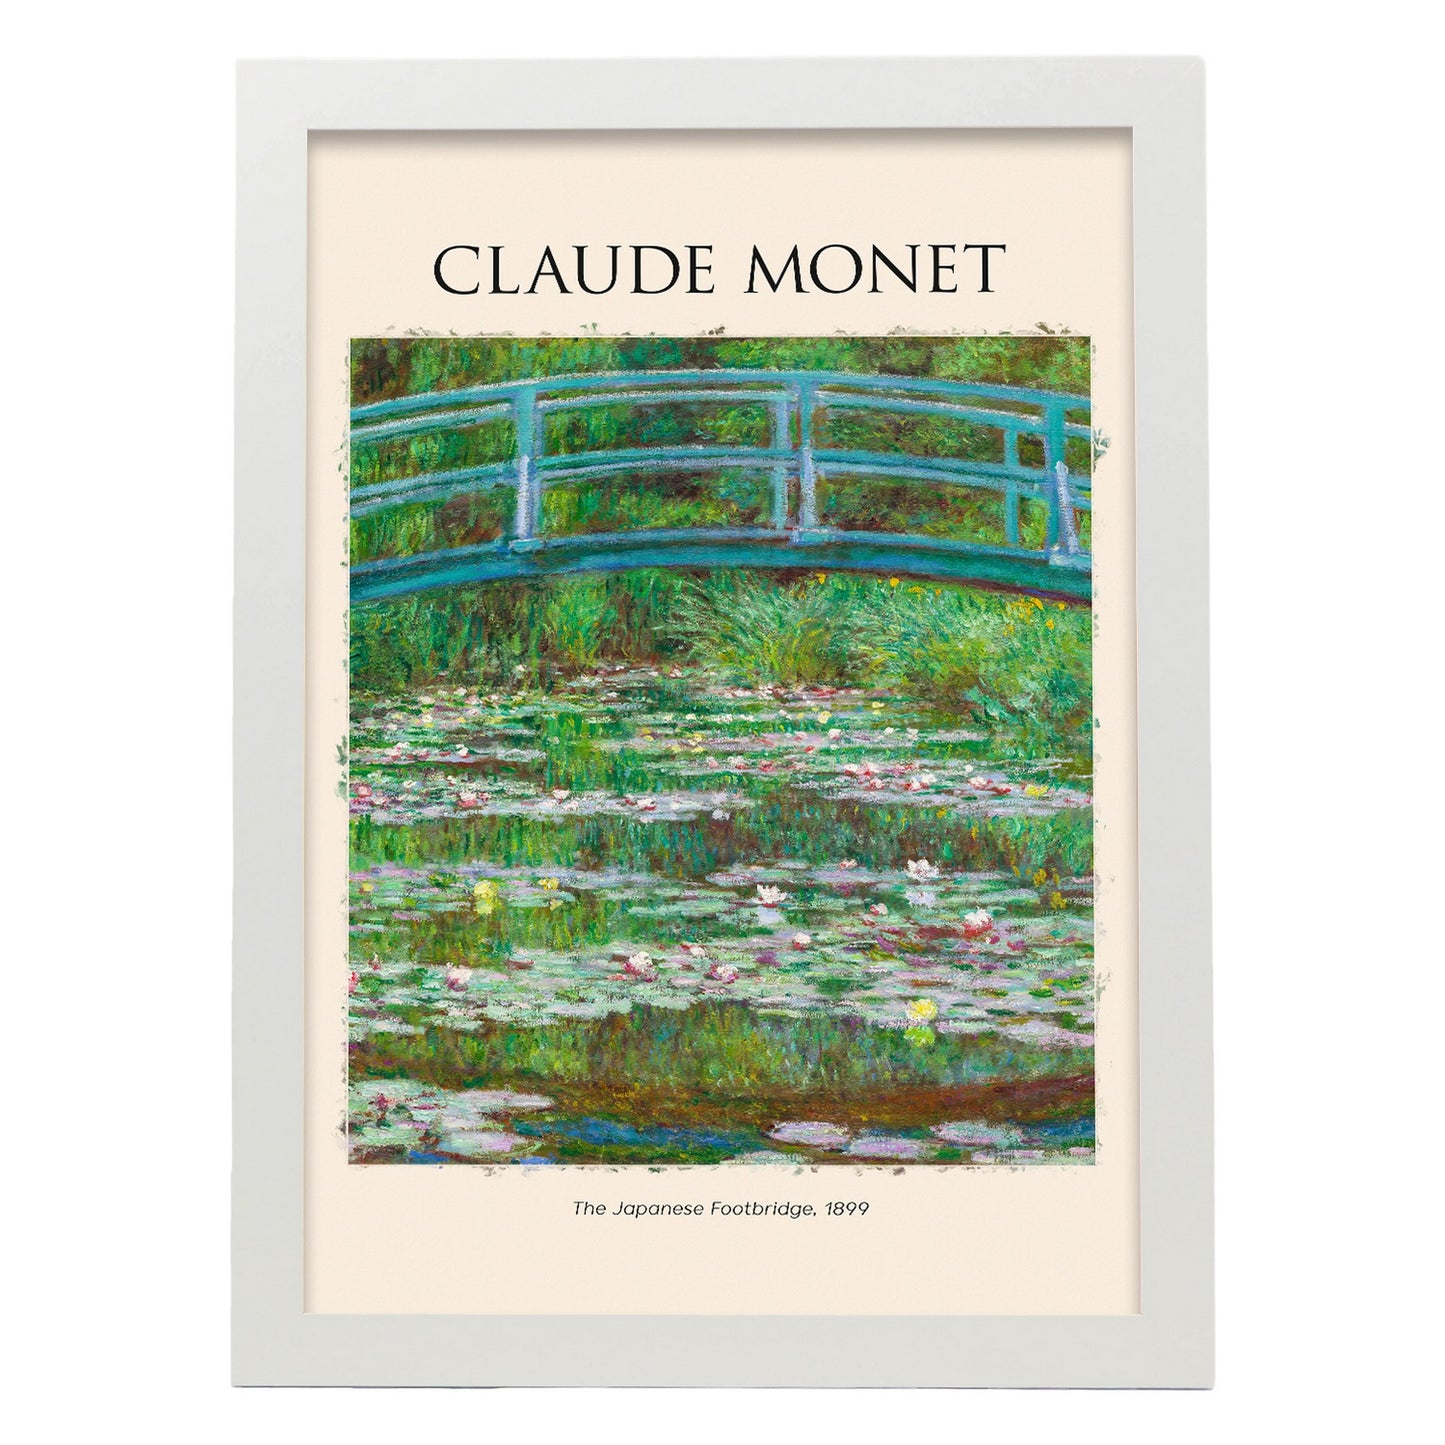 Lámina de Puente Japonés inspirada en Claude Monet